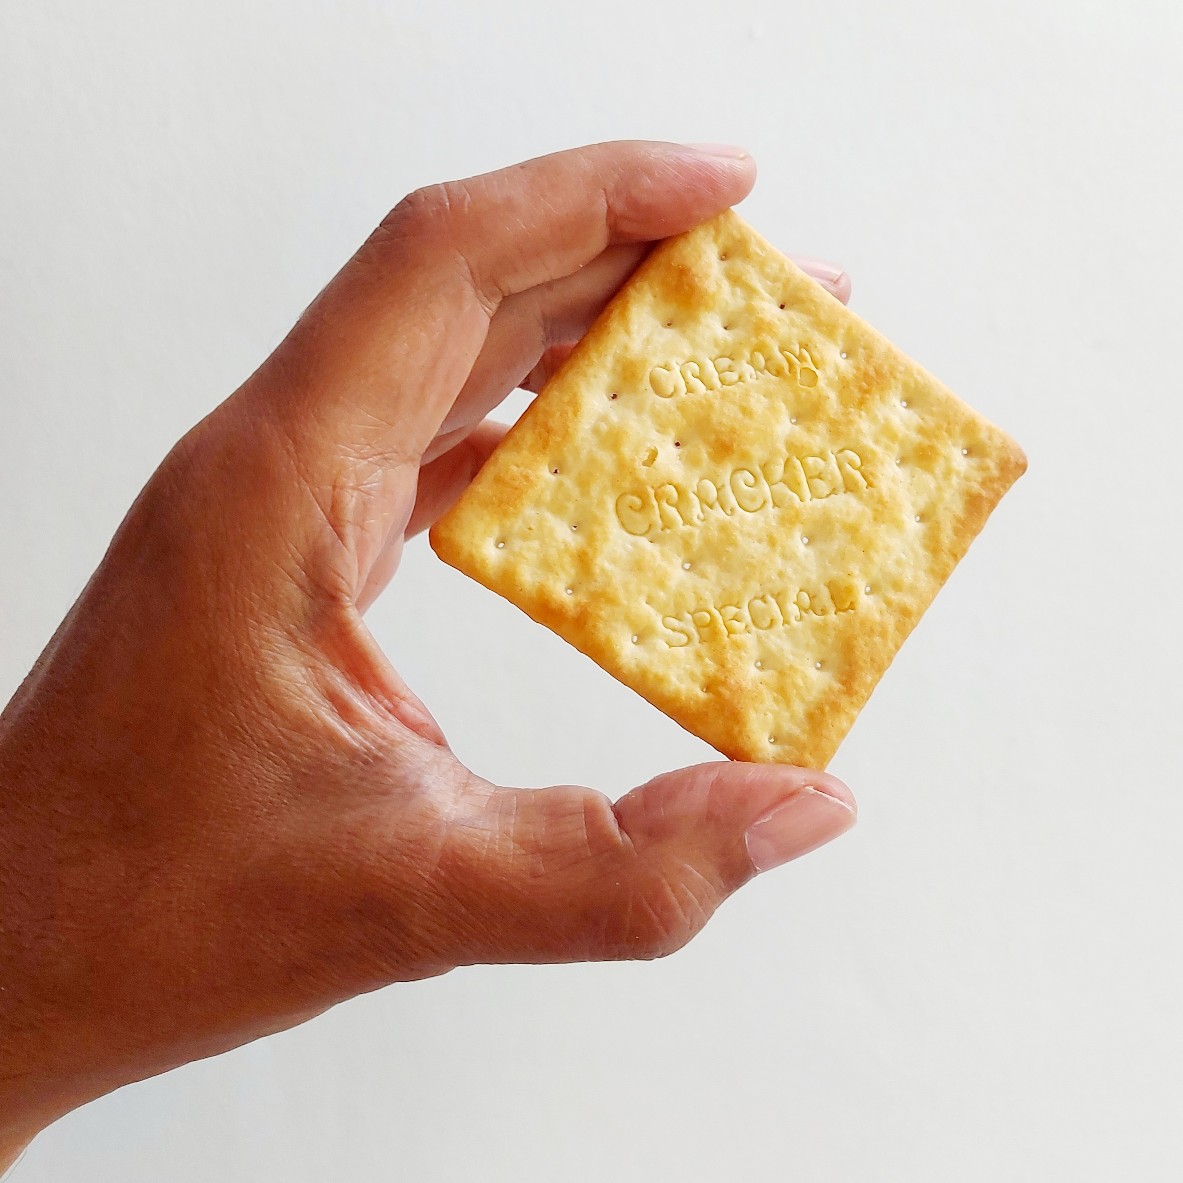 Monde crackers yang mirip Jacob's crackers 